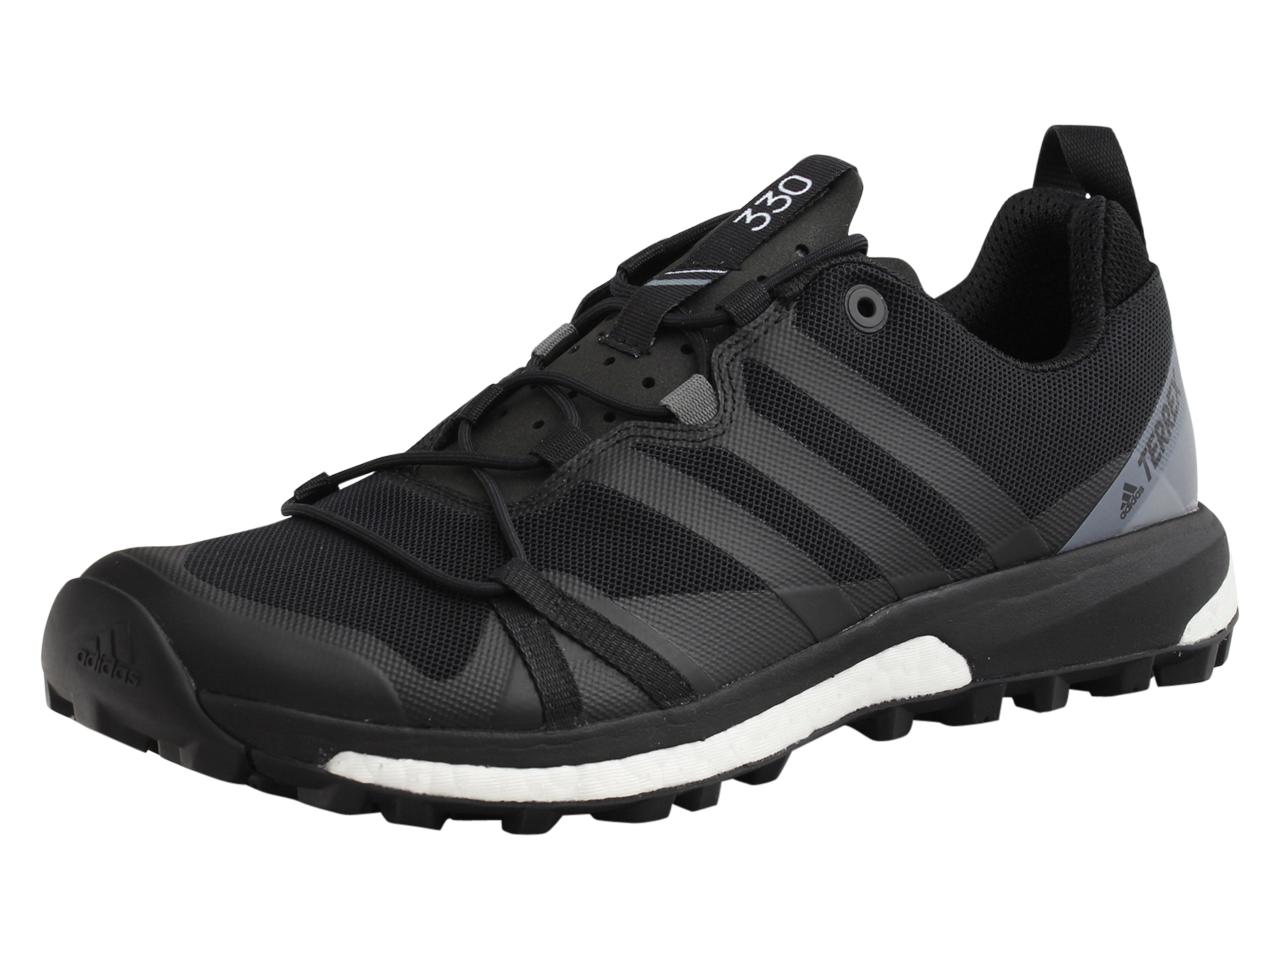 Adidas Men's Terrex Agravic All Terrain Trail Running Sneakers Shoes - Black - 8 D(M) US